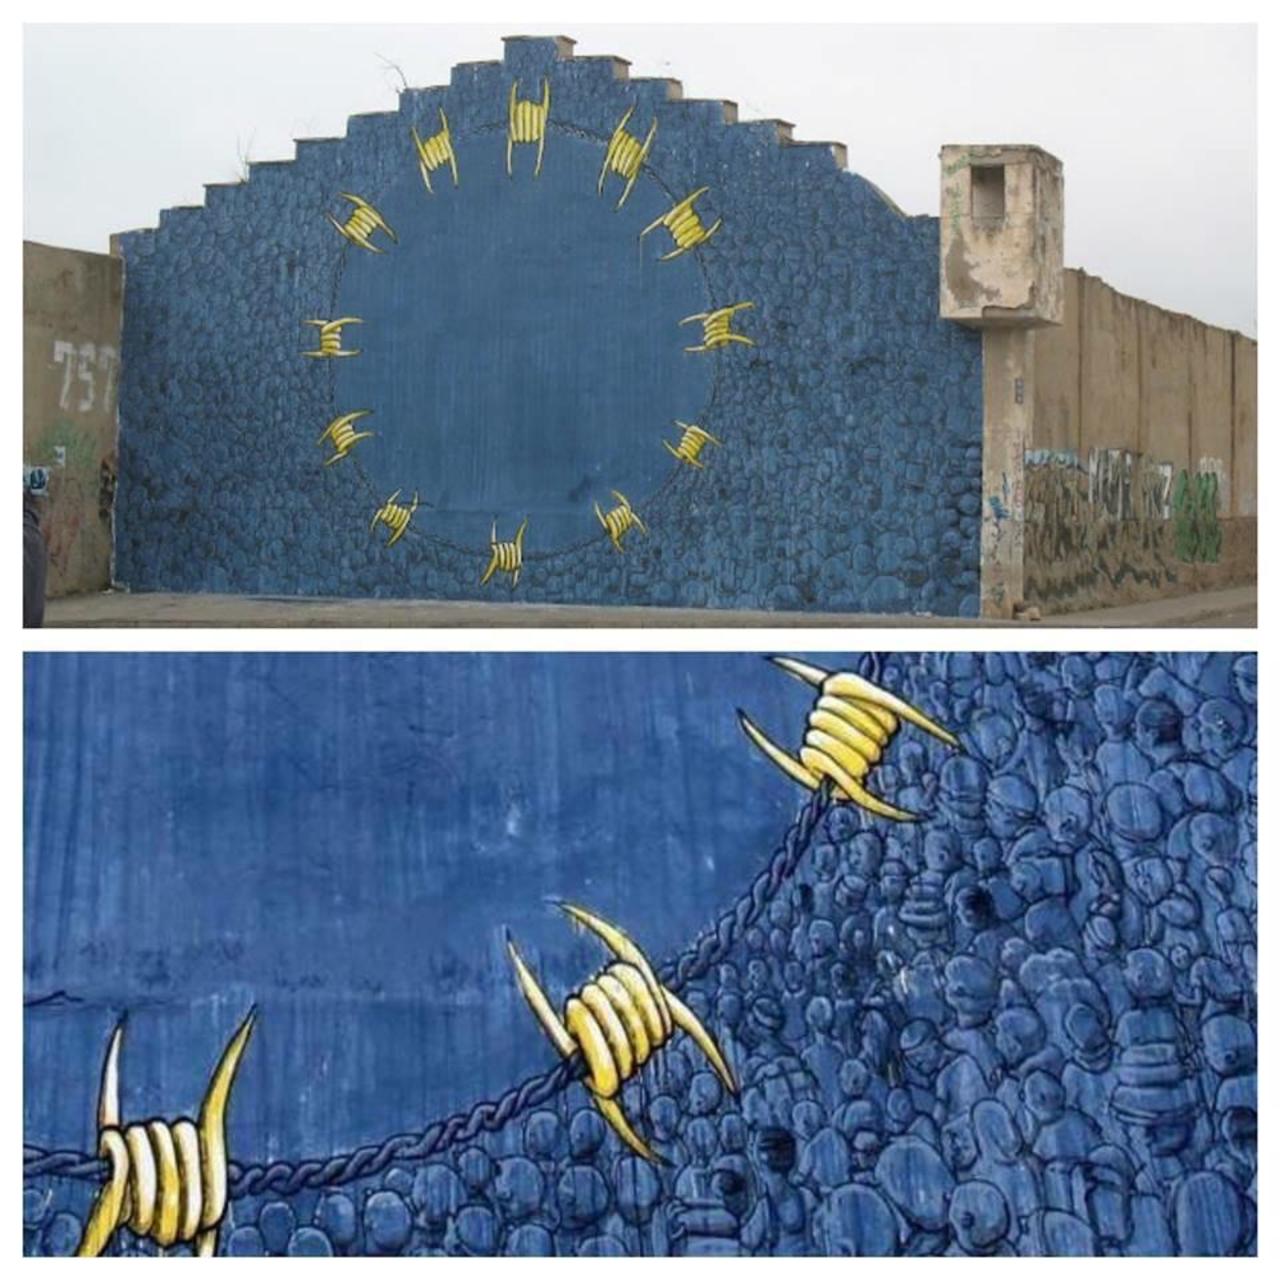 RT @Solucionista_: Mural en la frontera hispano - marroquí 
#streetart #graffiti #arte #emigración #Europa http://t.co/4CQL8wlKdw